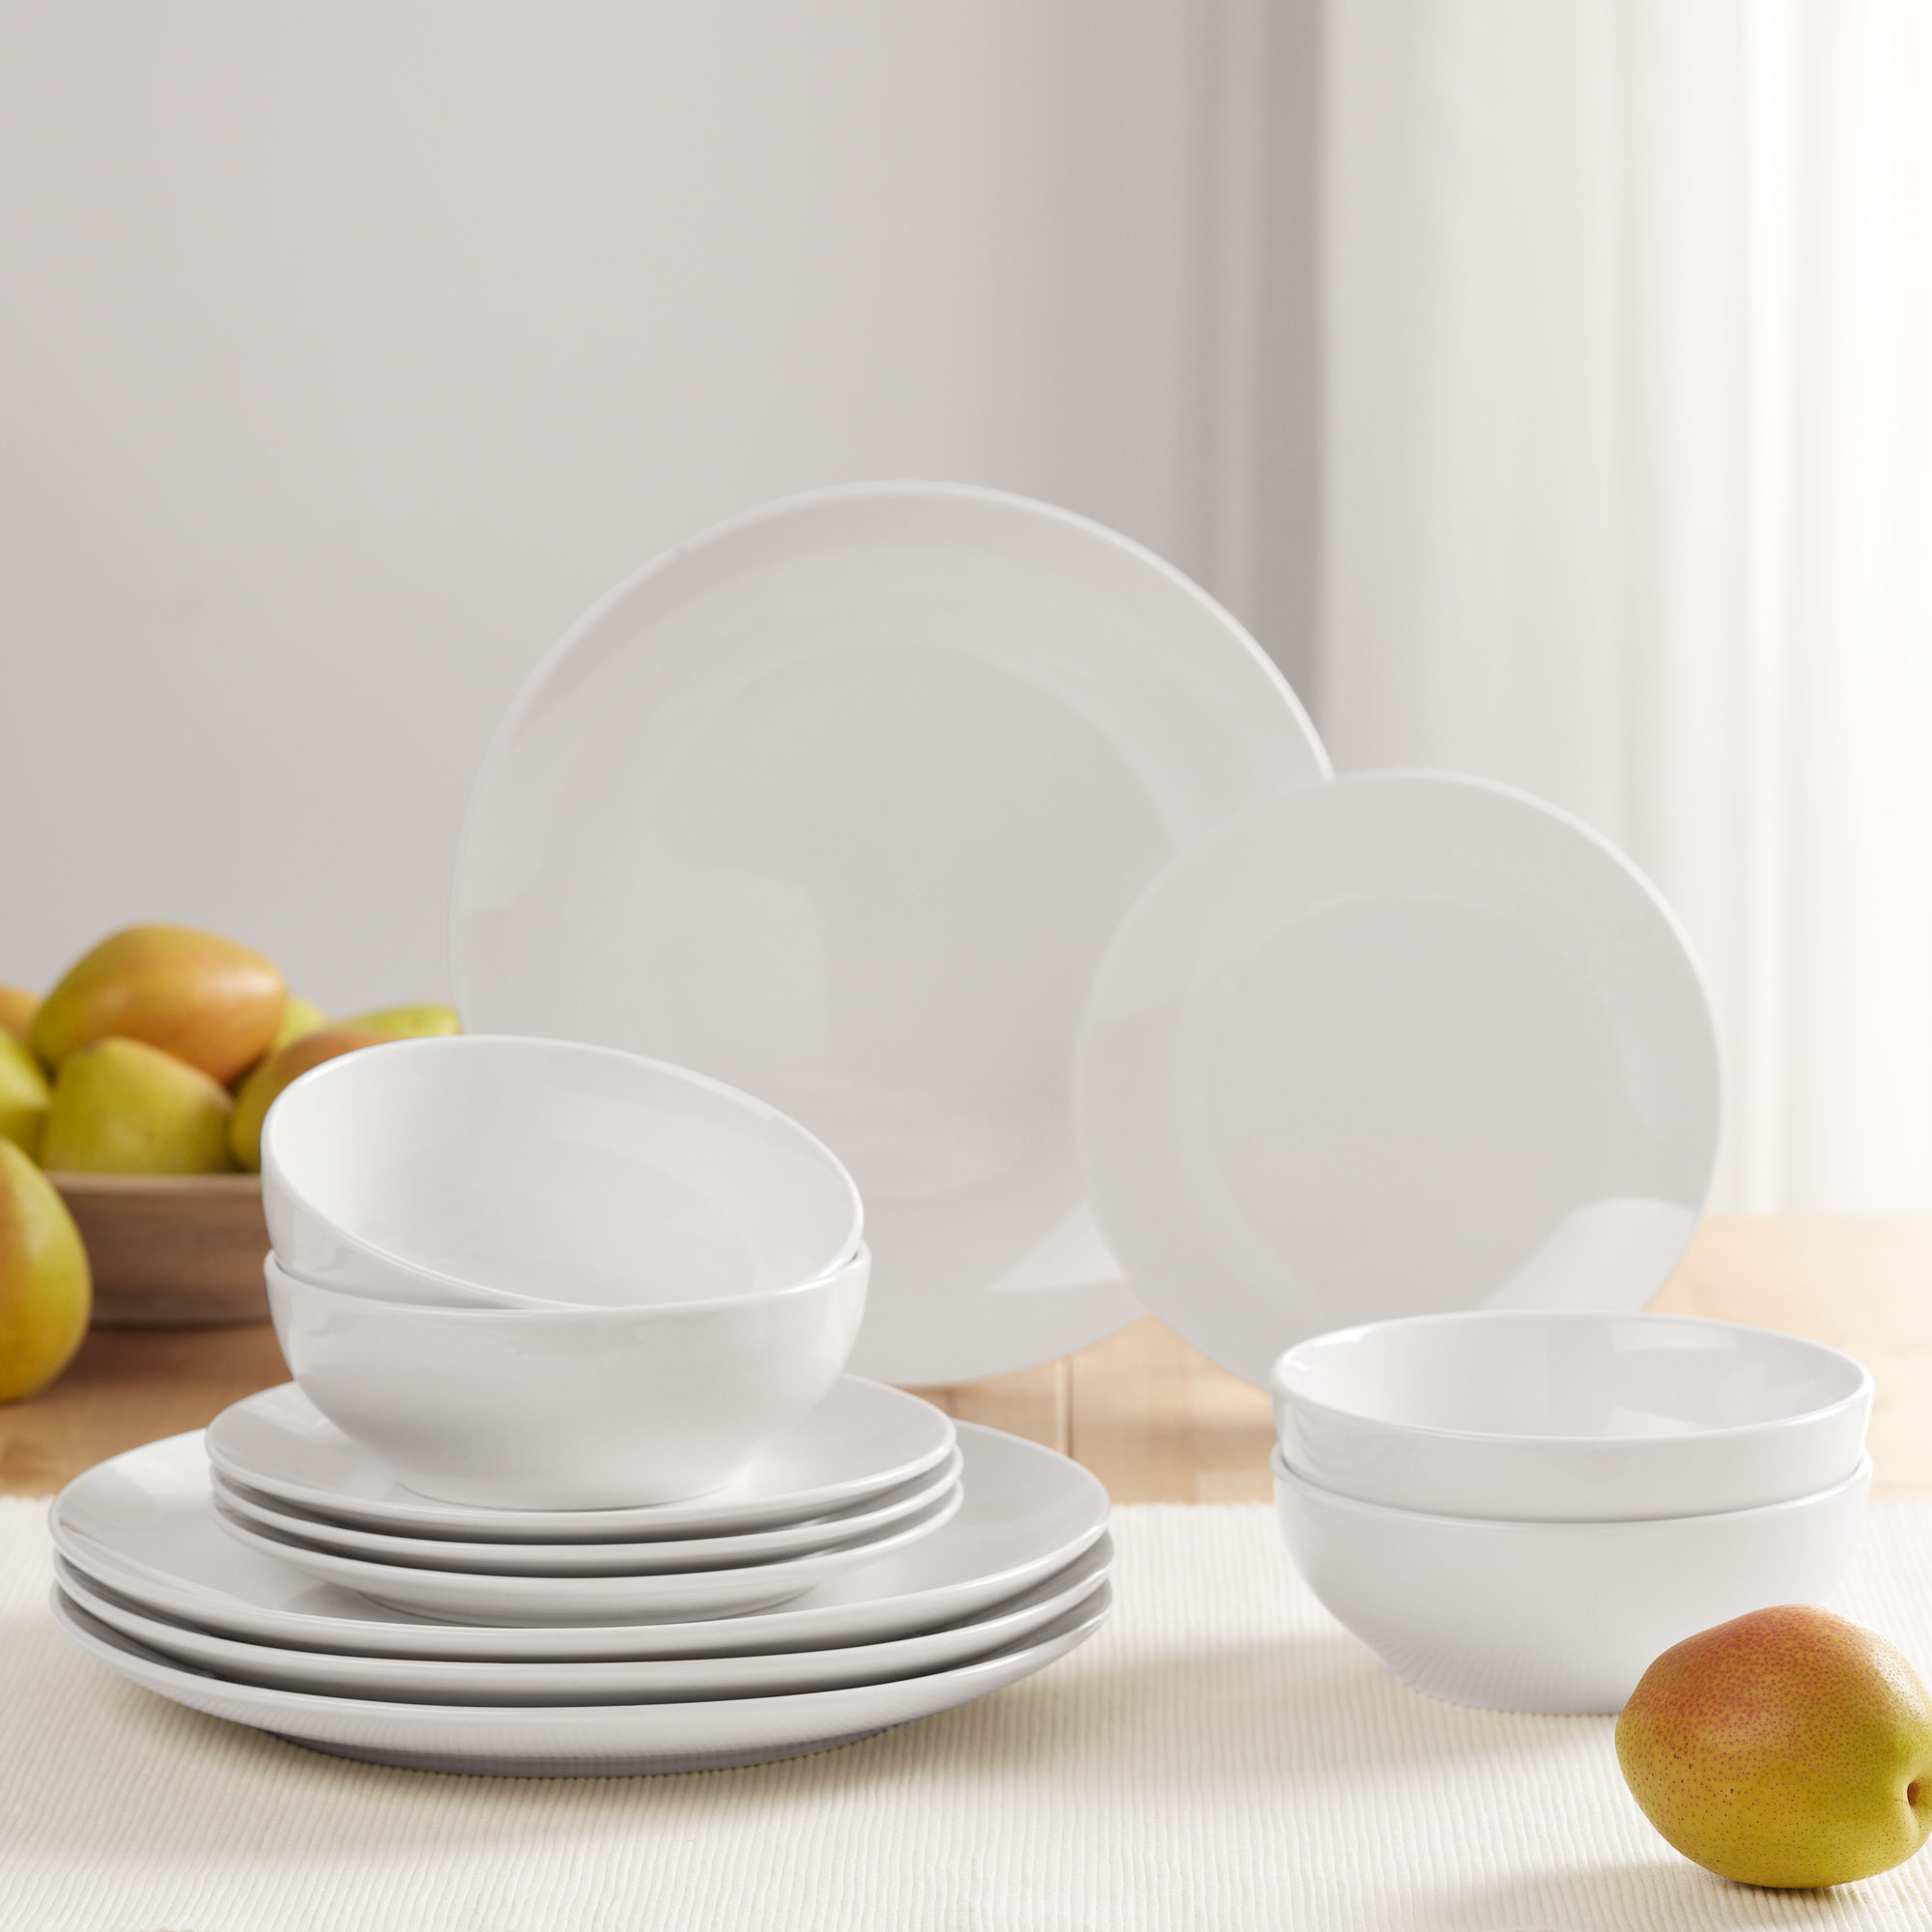 Mainstays Glazed White Stoneware Dinnerware Set, 12-Pieces - image 3 of 12